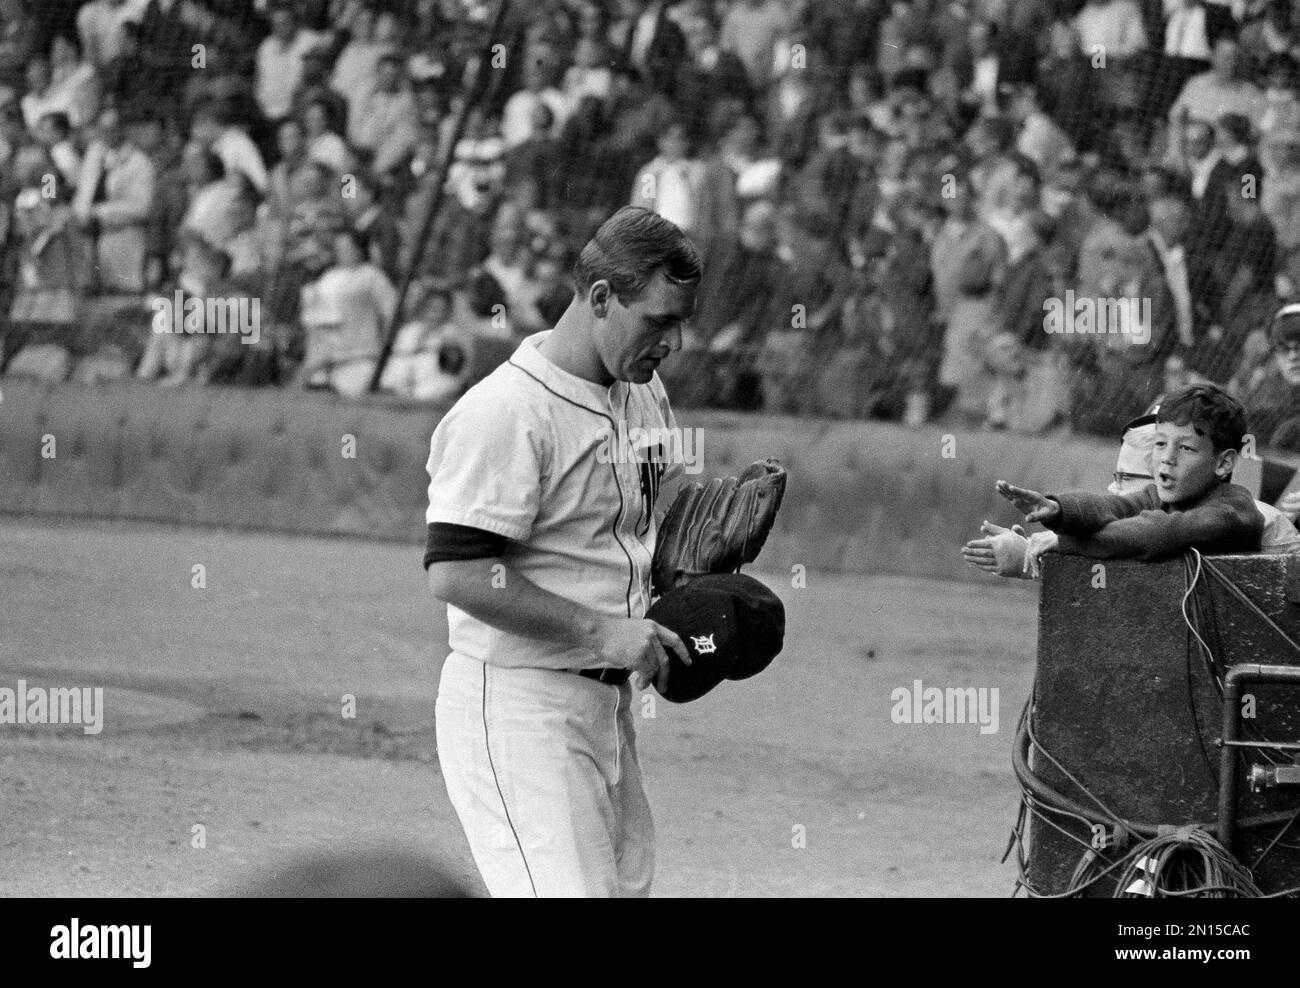 Detroit Tigers ace pitcher Denny McLain shows off a large stuffed